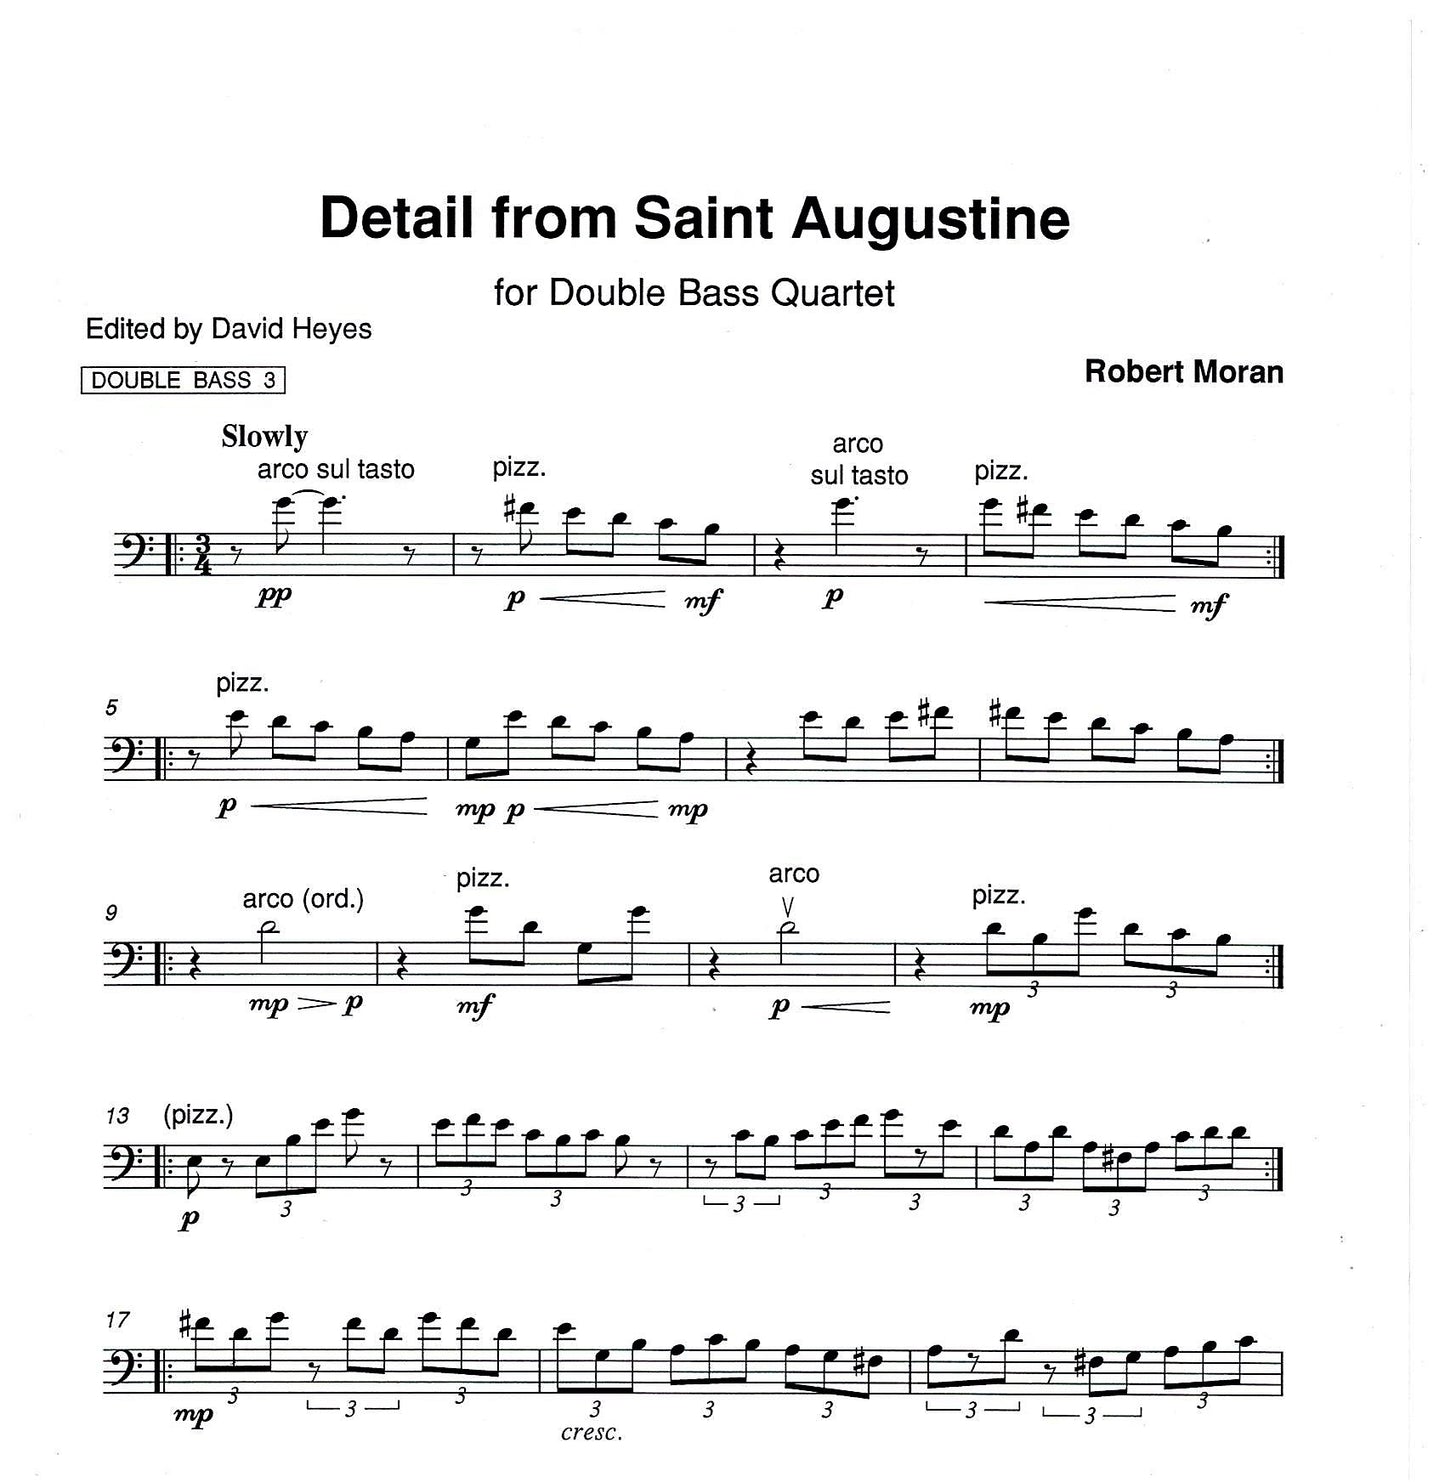 Robert Moran: Detail from Saint Augustine for double bass quartet